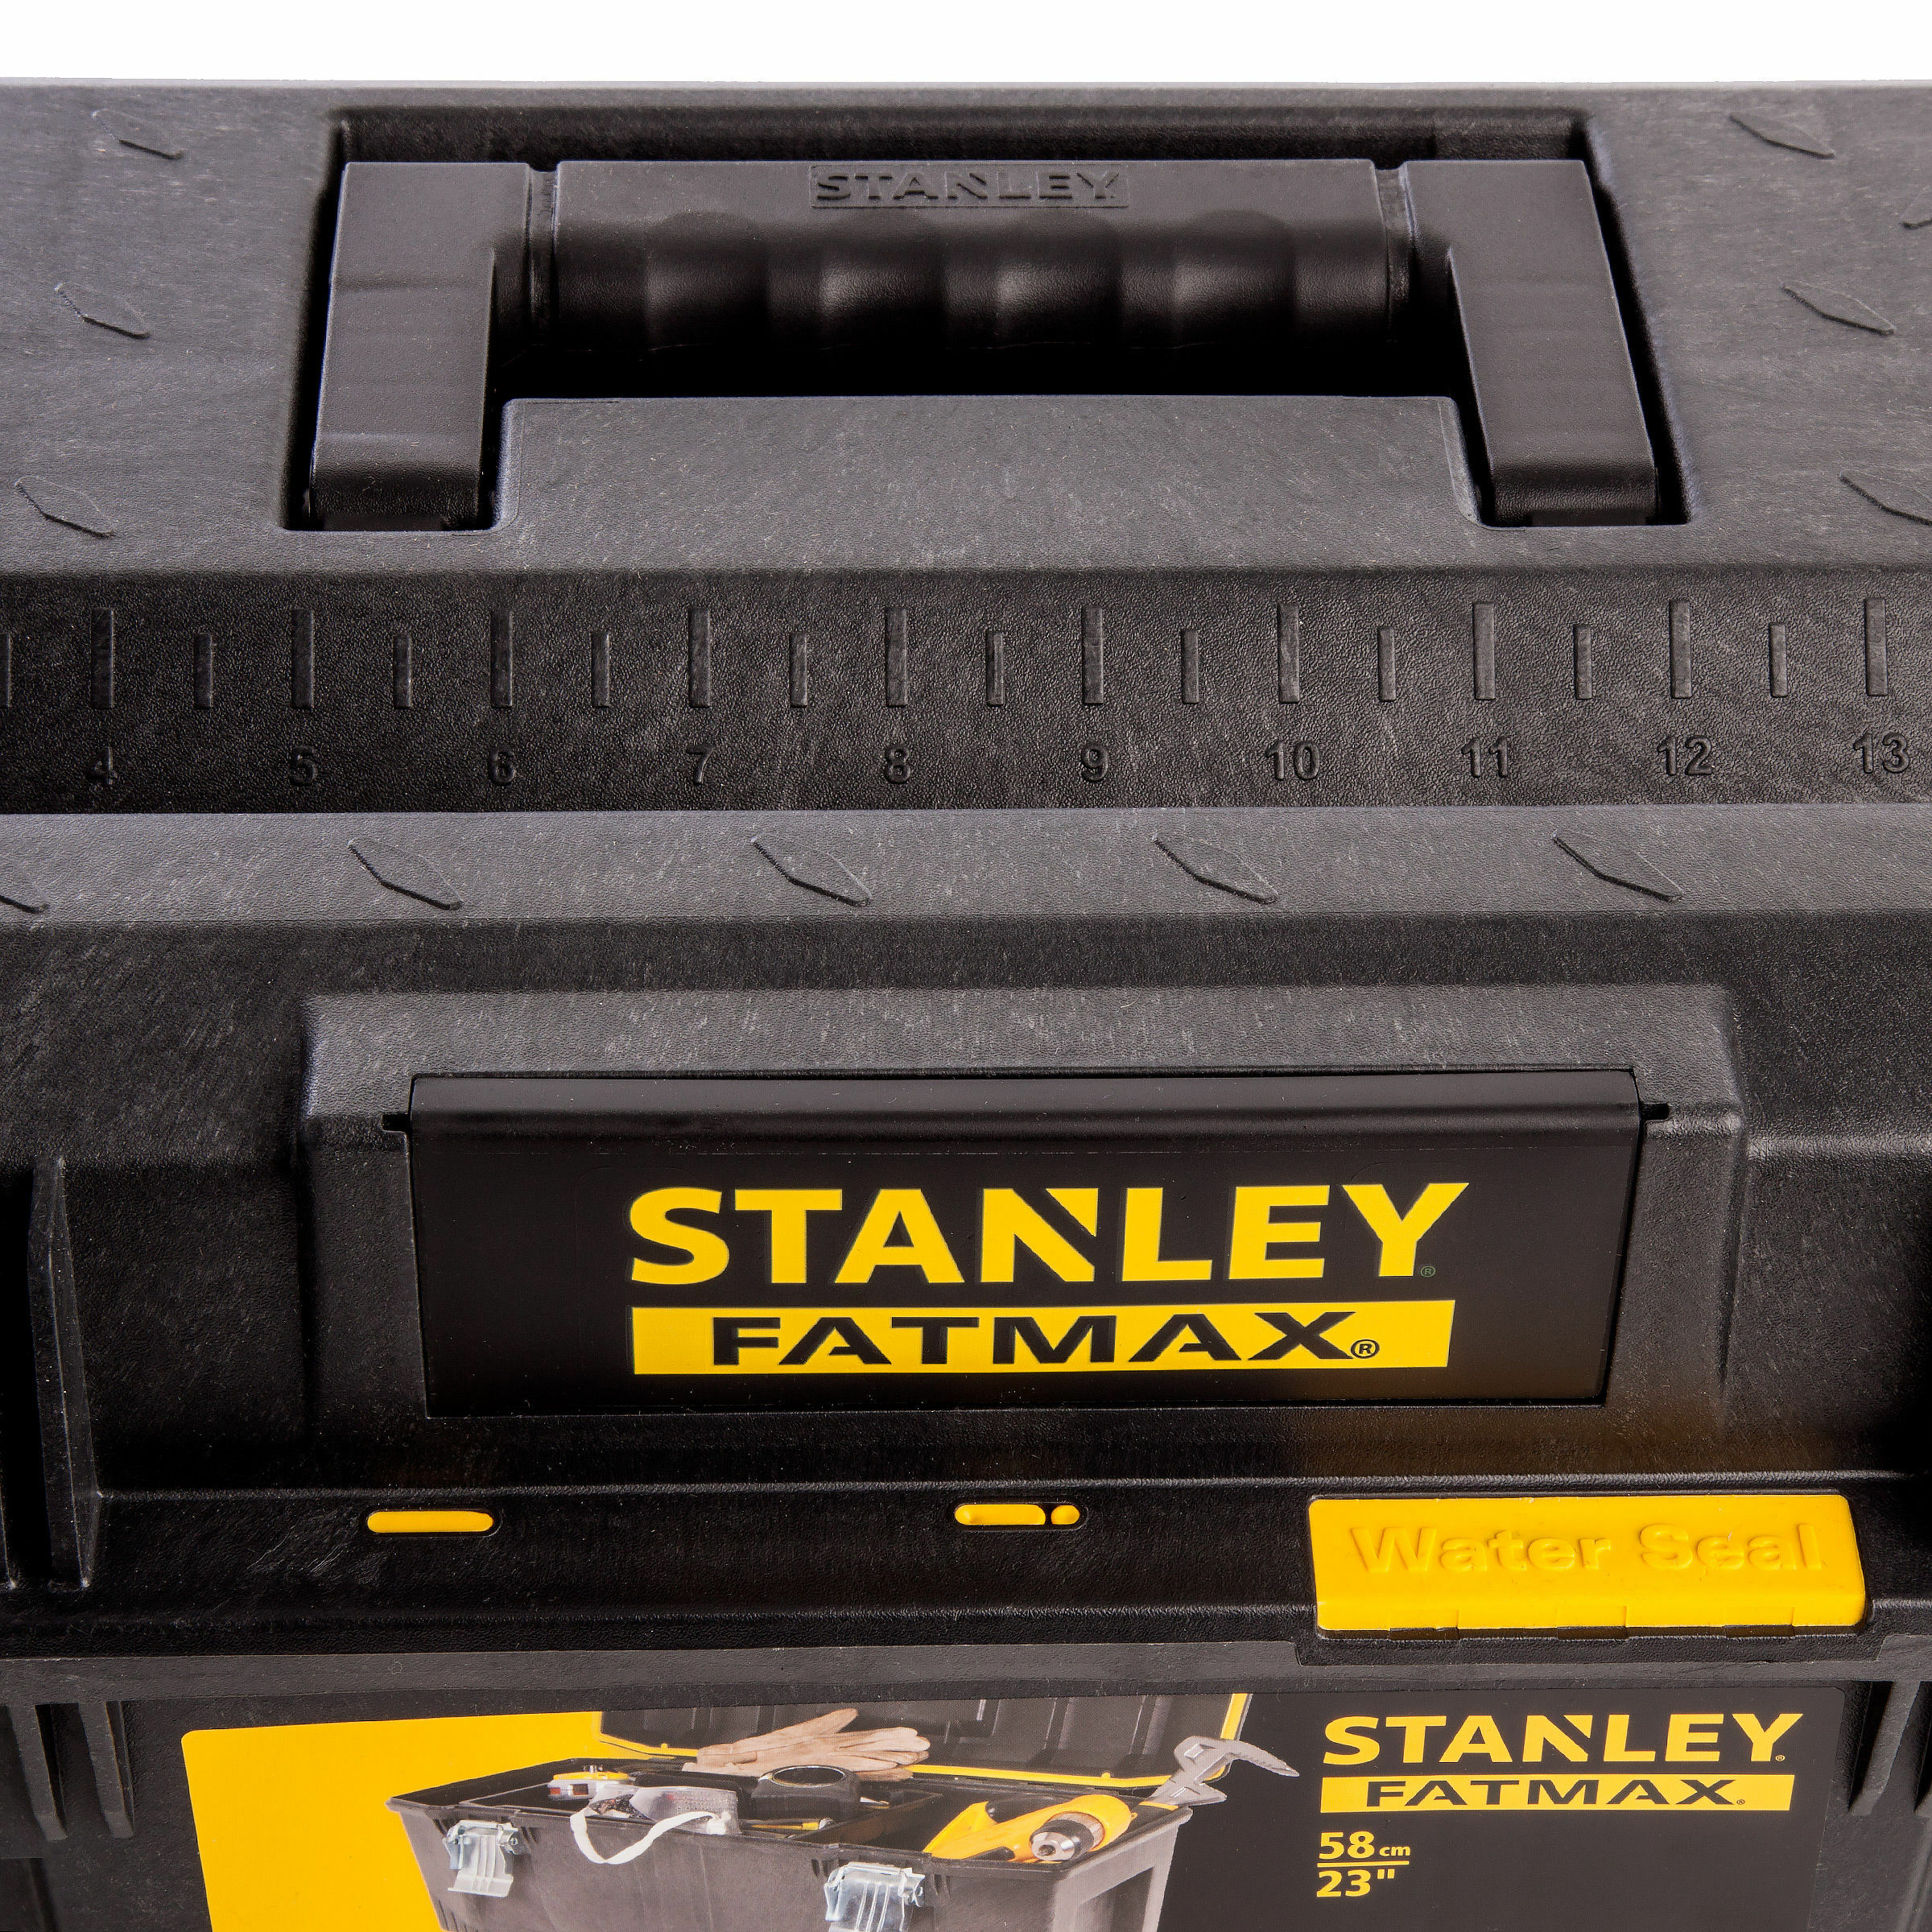 FATMAX® Structural Foam Tool Box Stanley - 6